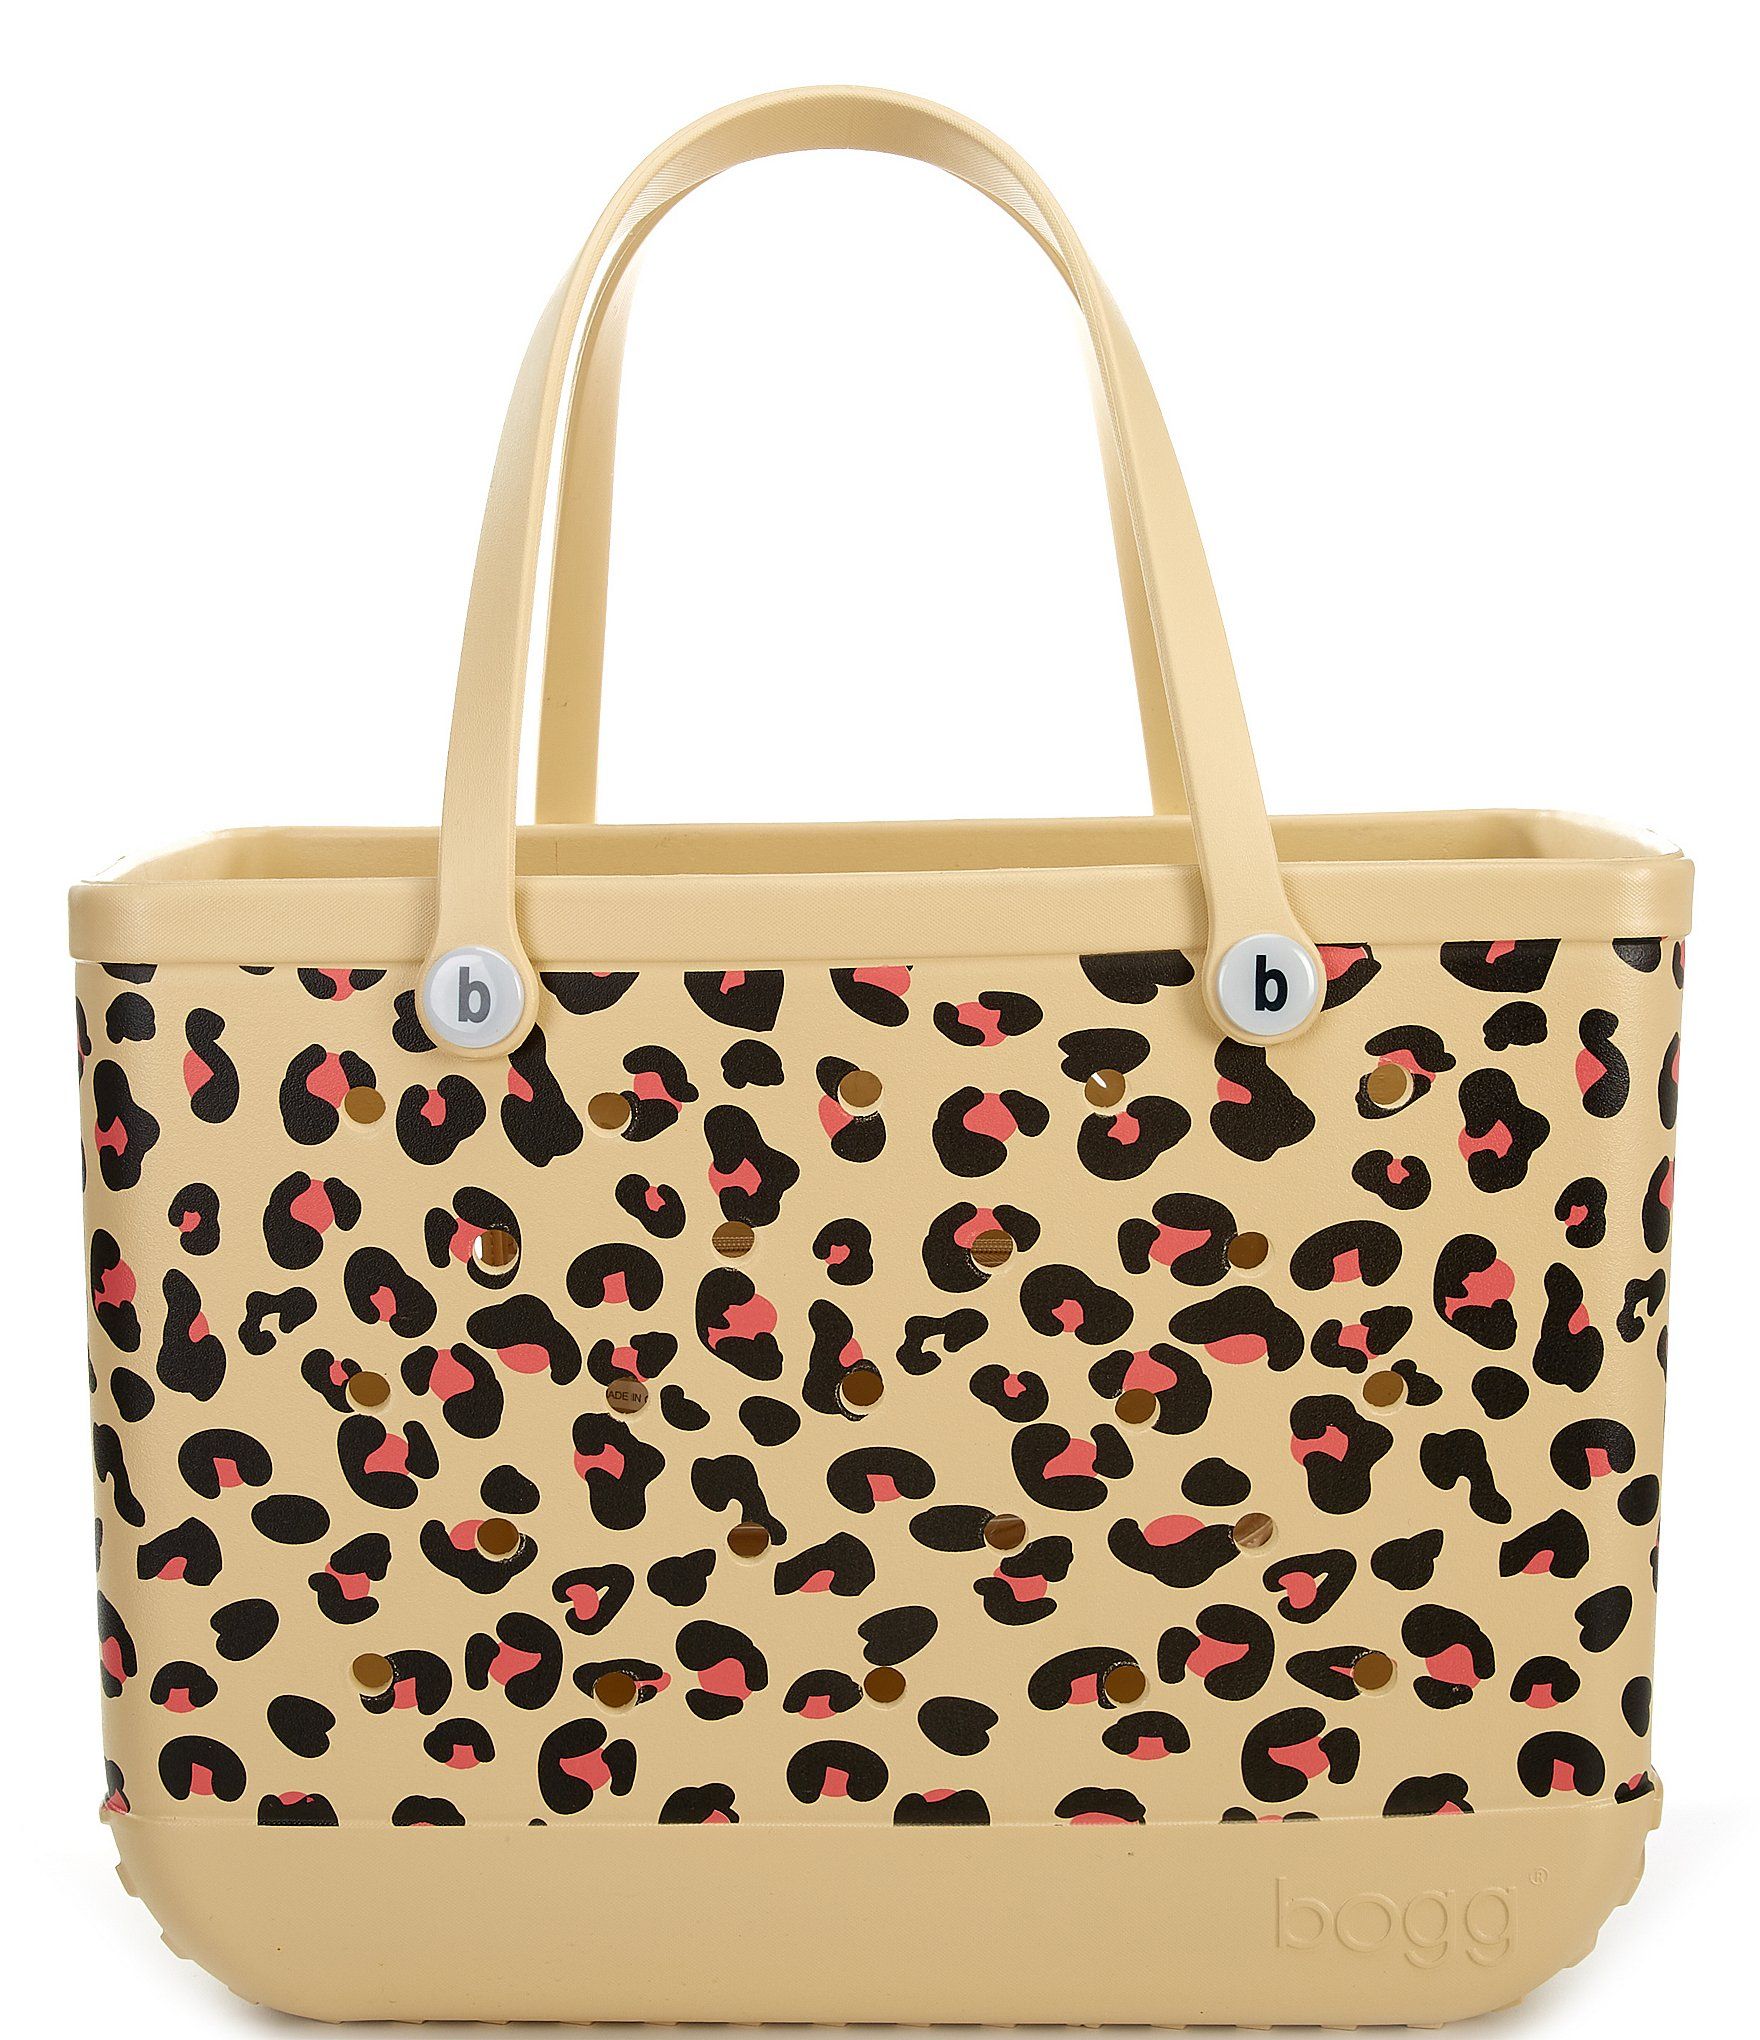 Bogg Bag Original Bogg Bag Leopard Tote | Dillard's | Dillards